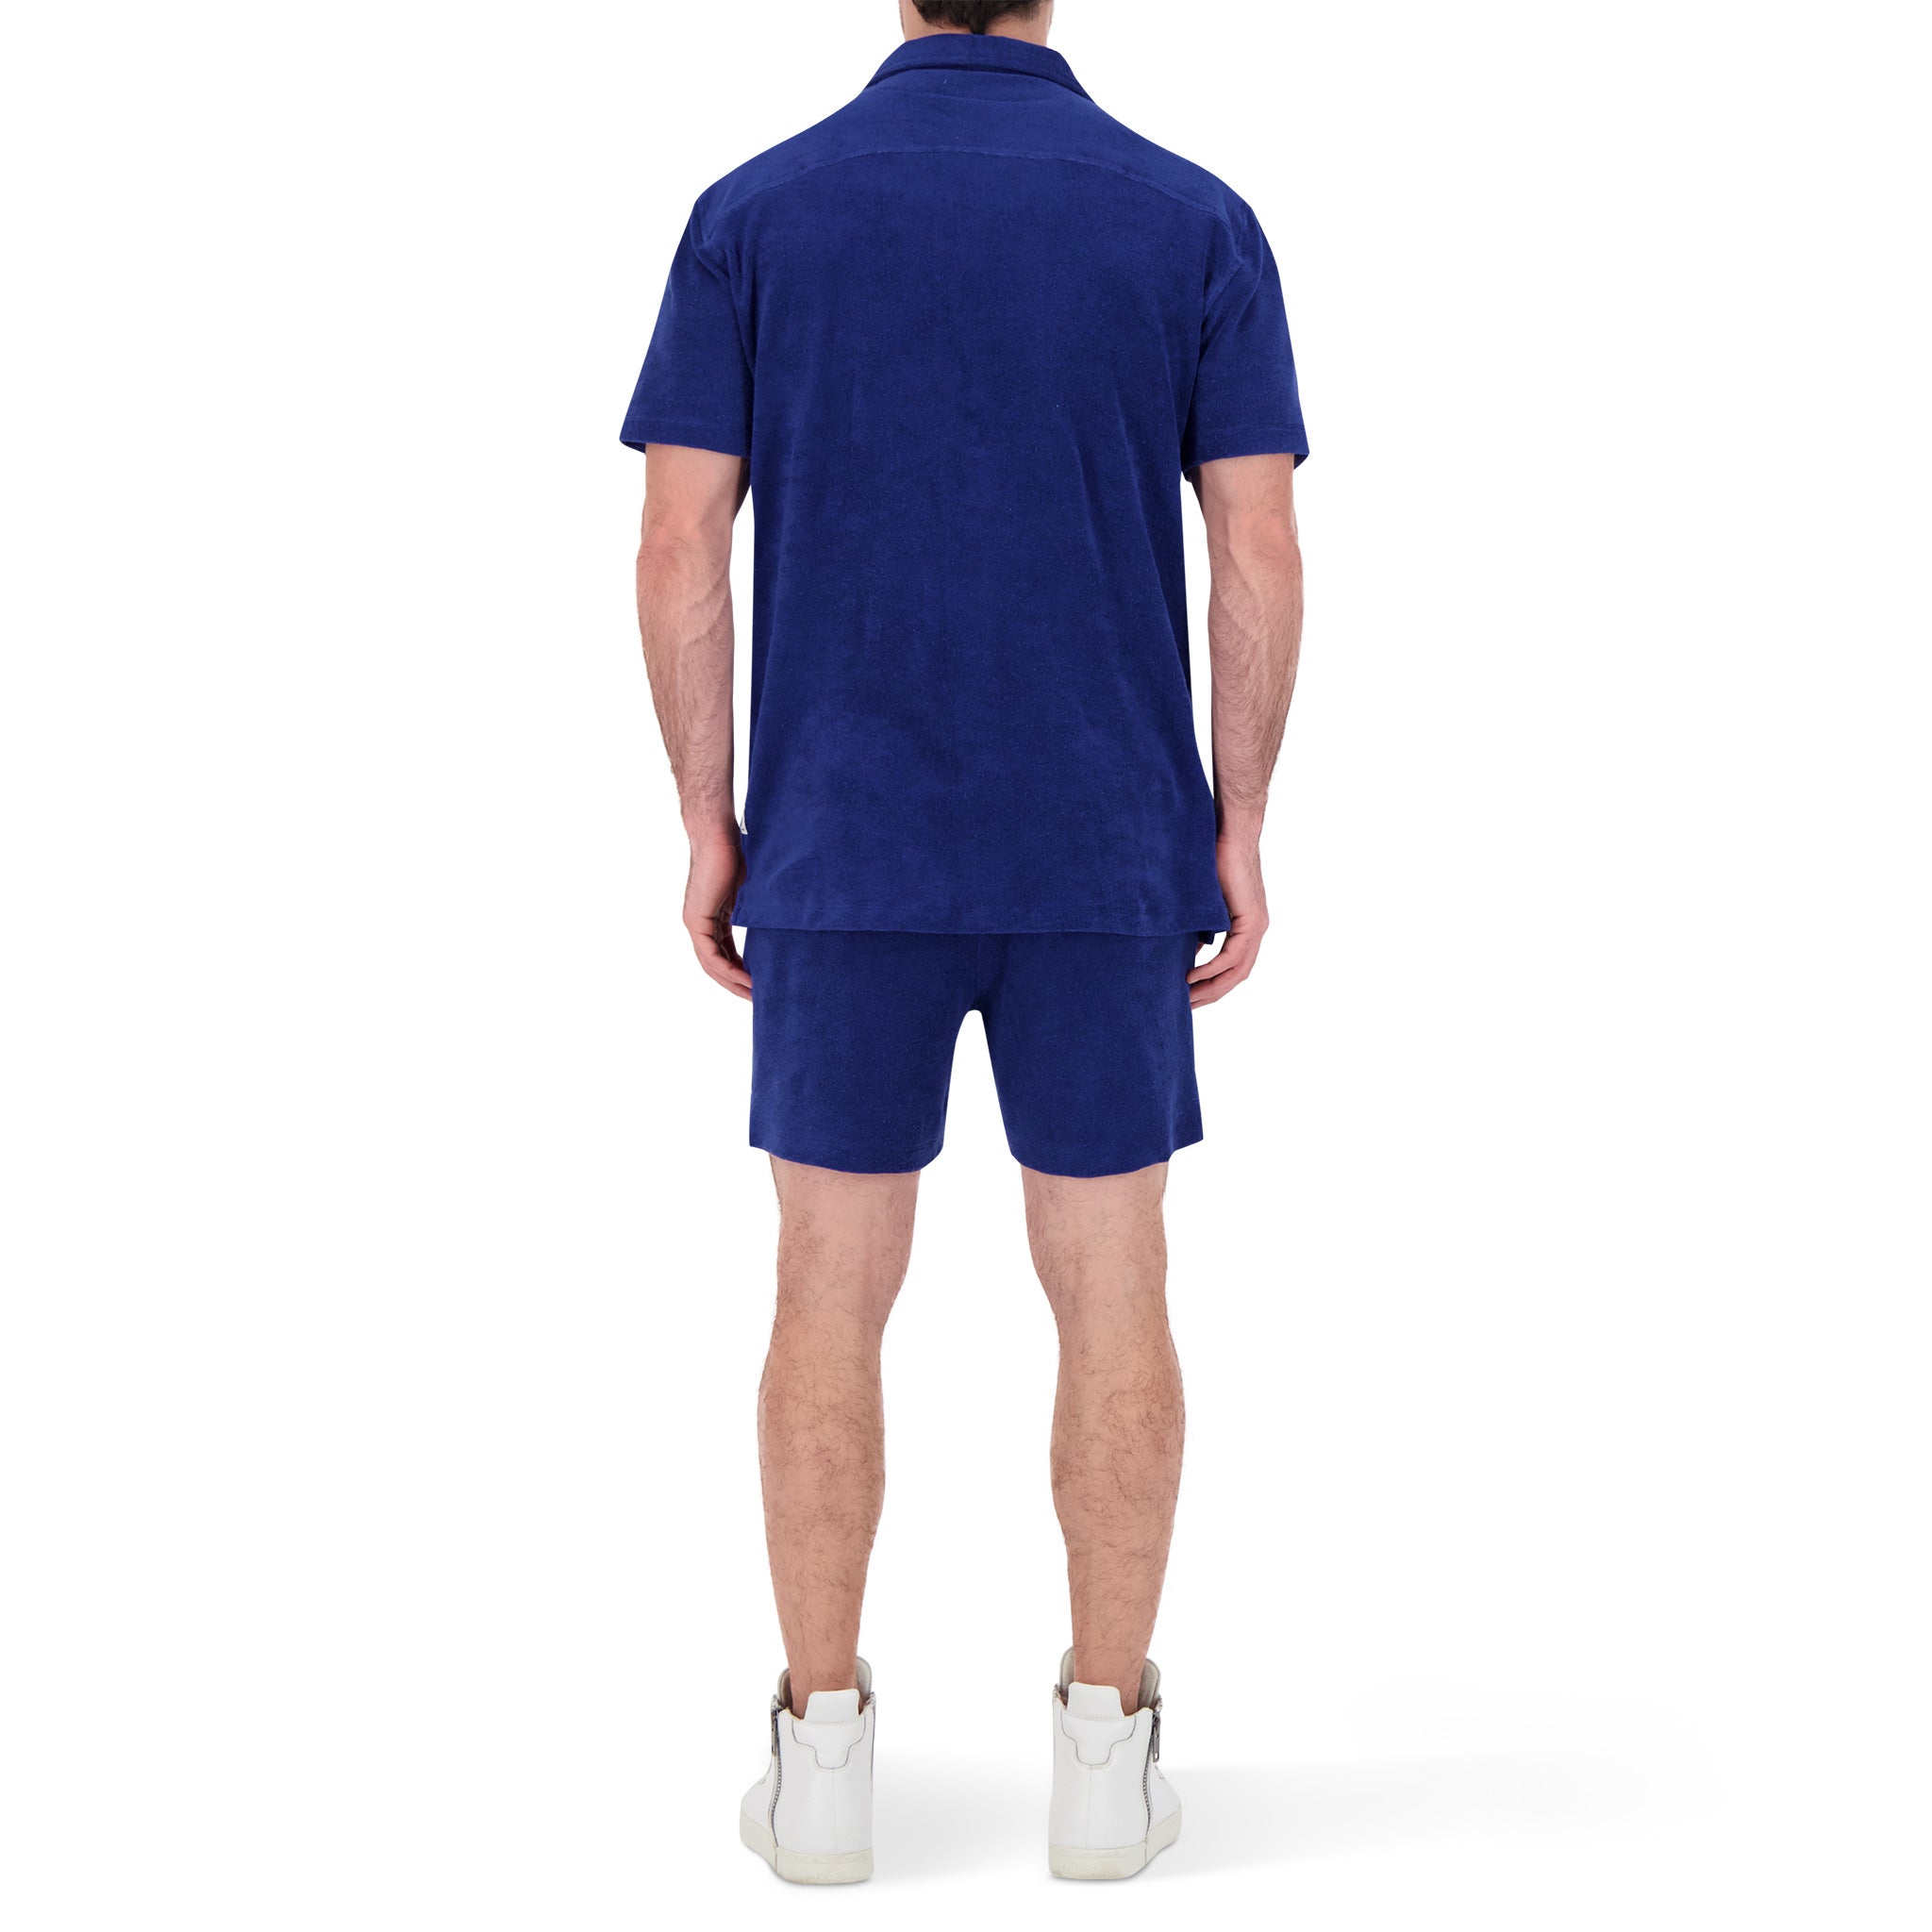 Terry Cloth Camp Shirt in Indigo Blue